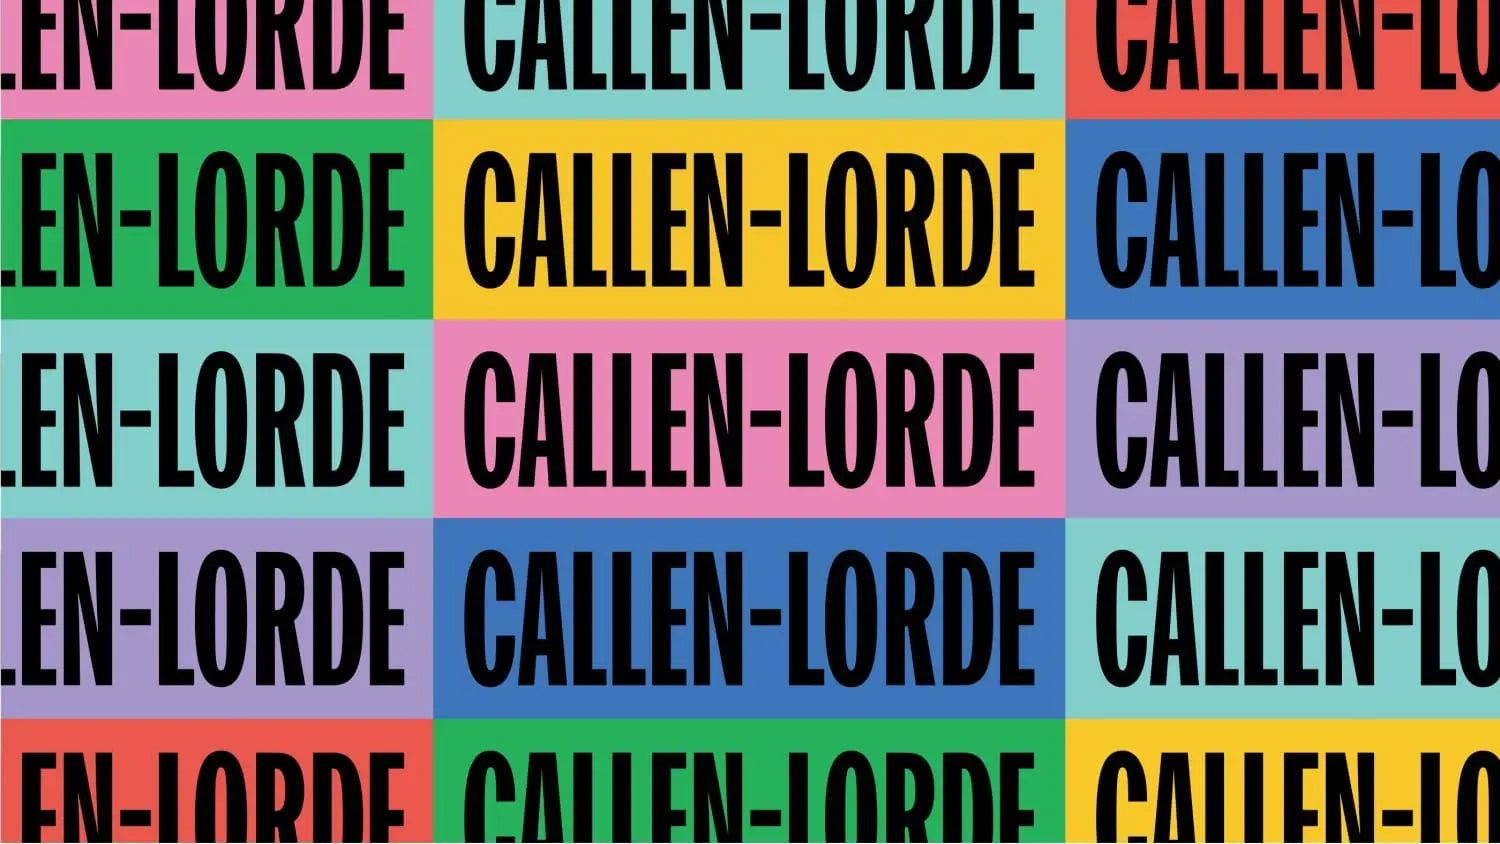 Celebrate Pride, Support Callen-Lorde!